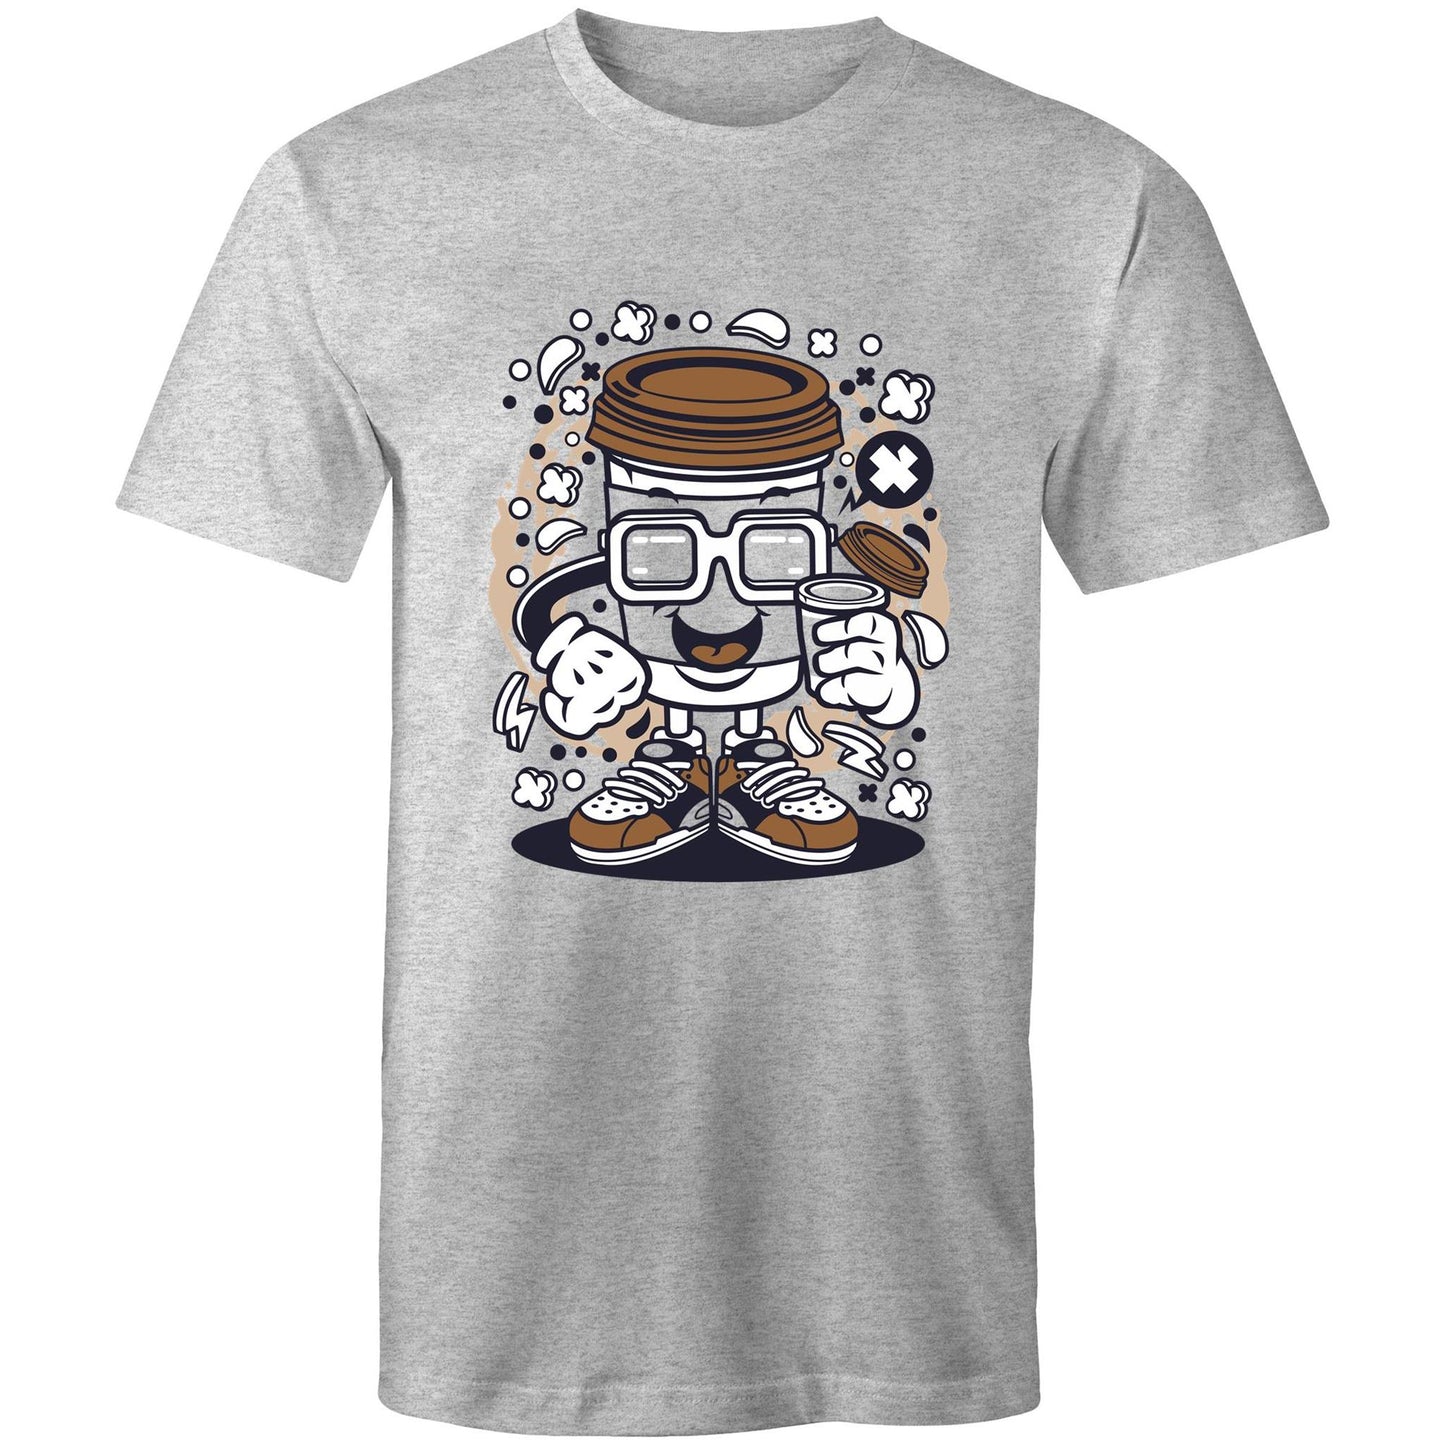 Coffee Head Comic T-Shirt